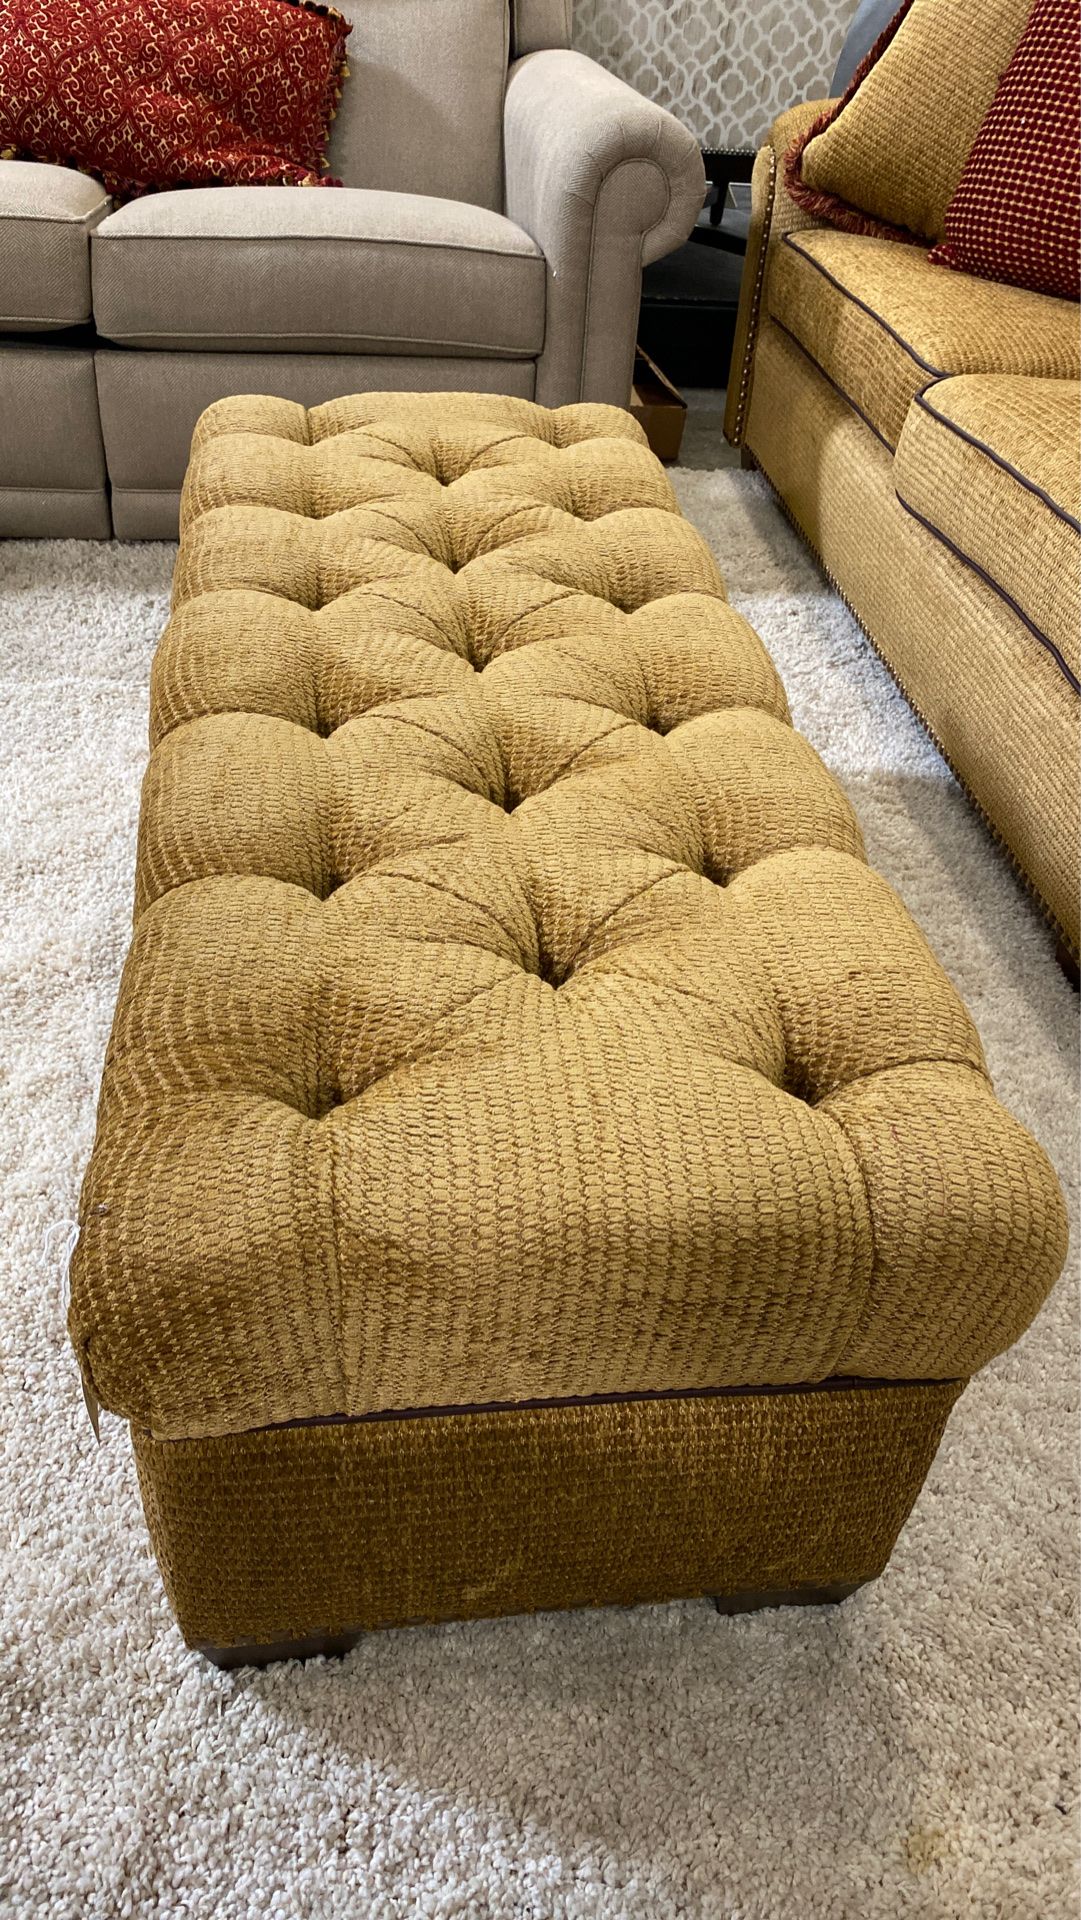 Rectangle tan upholstered ottoman